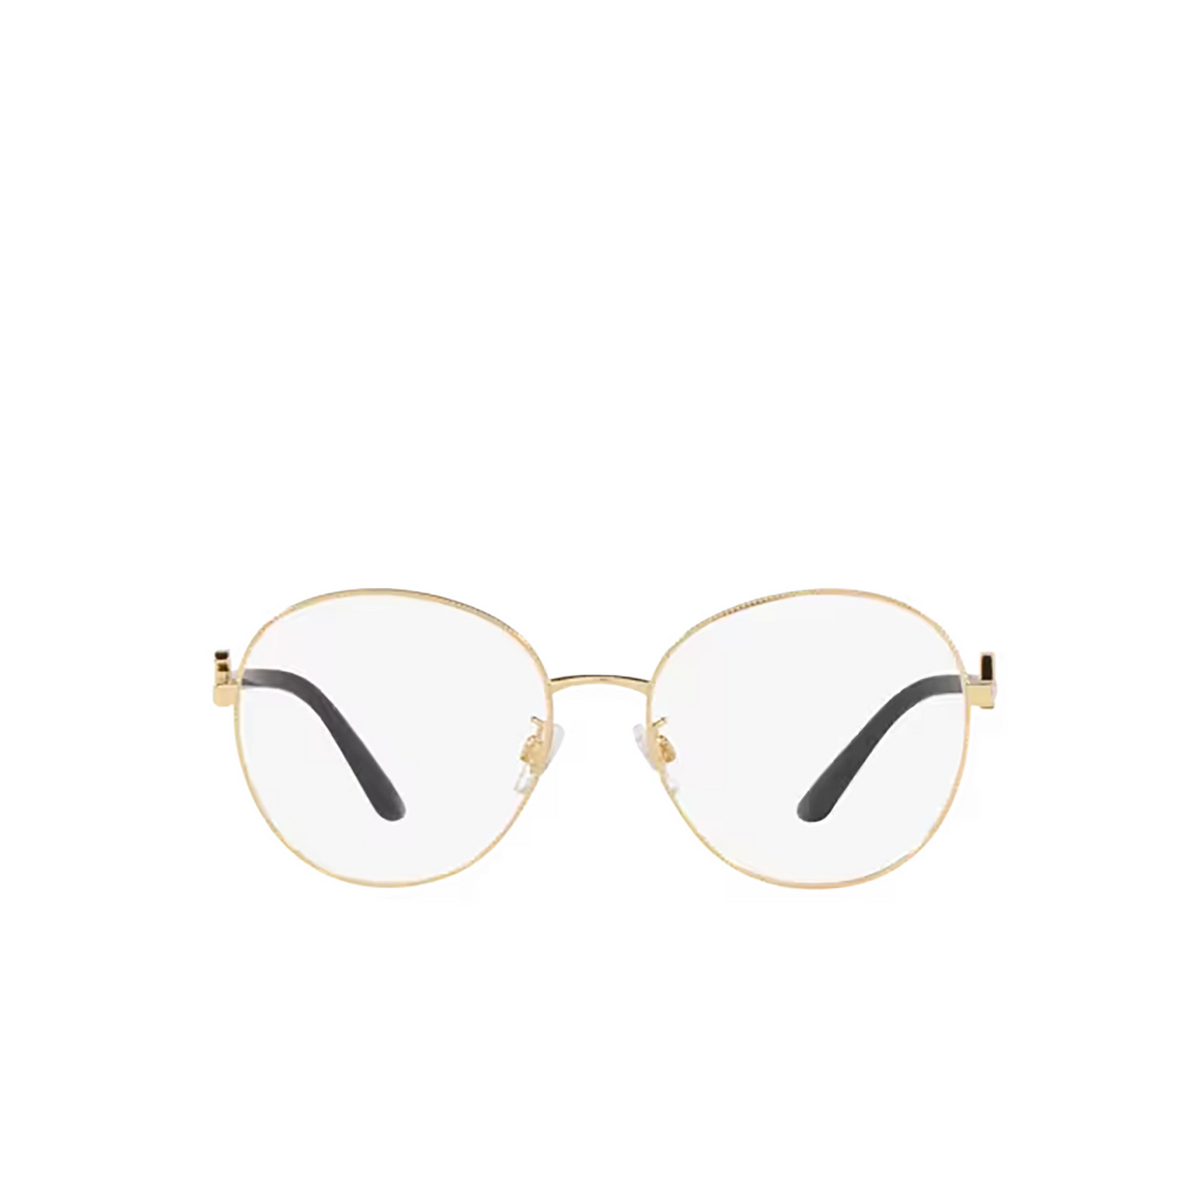 Dolce & Gabbana DG1339 Eyeglasses 02 Gold - front view